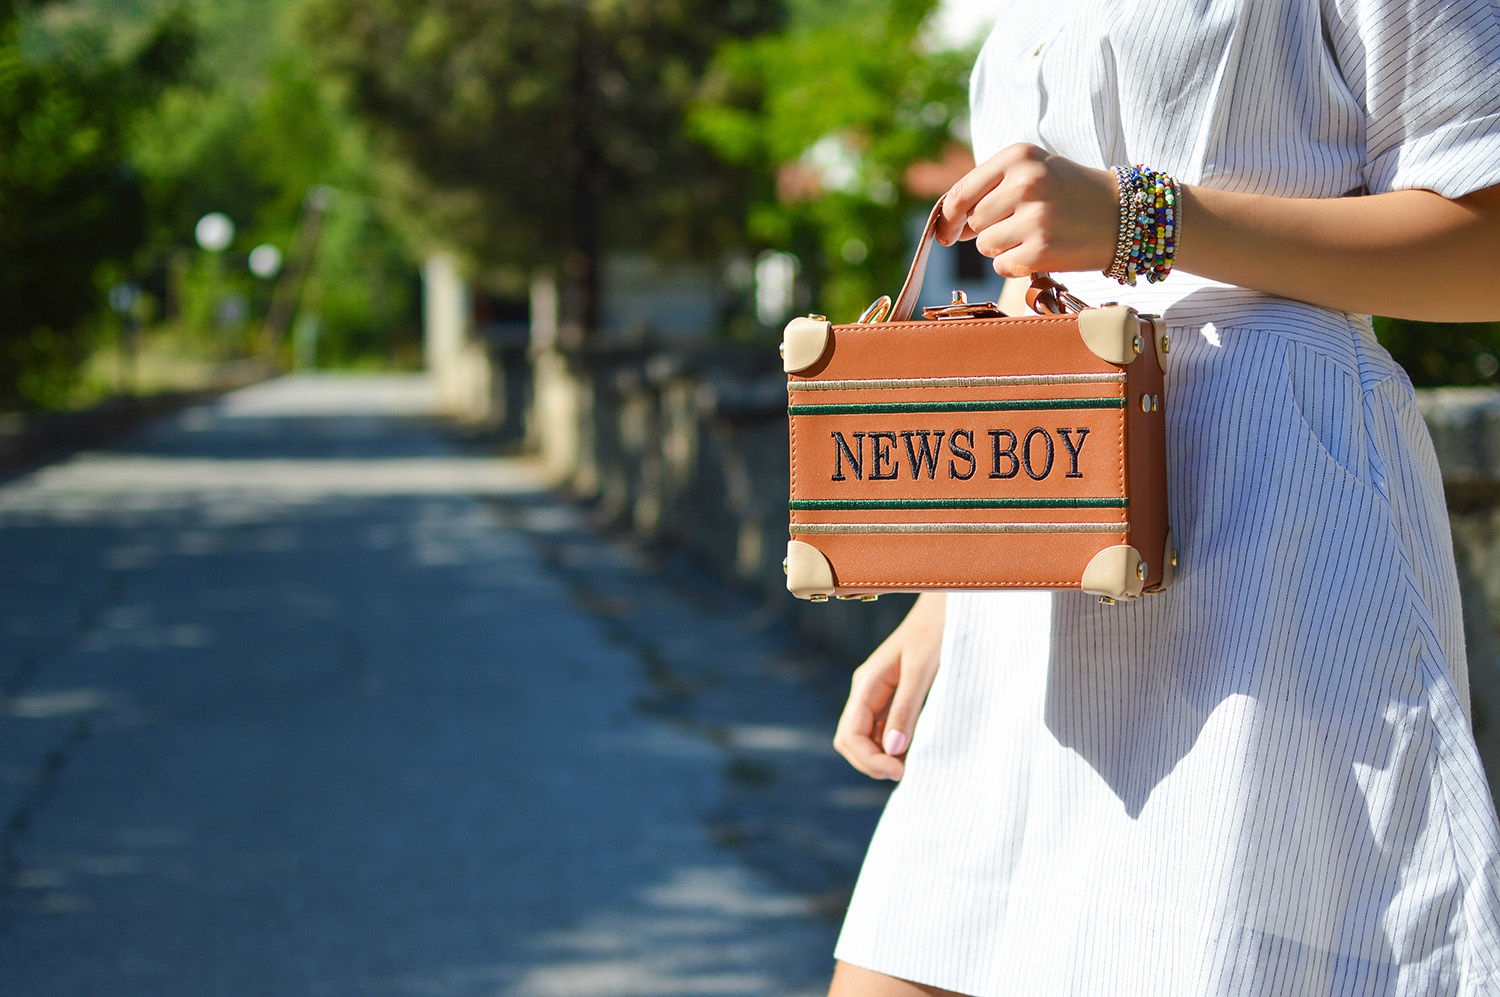 News Boy by Tamara Bellis